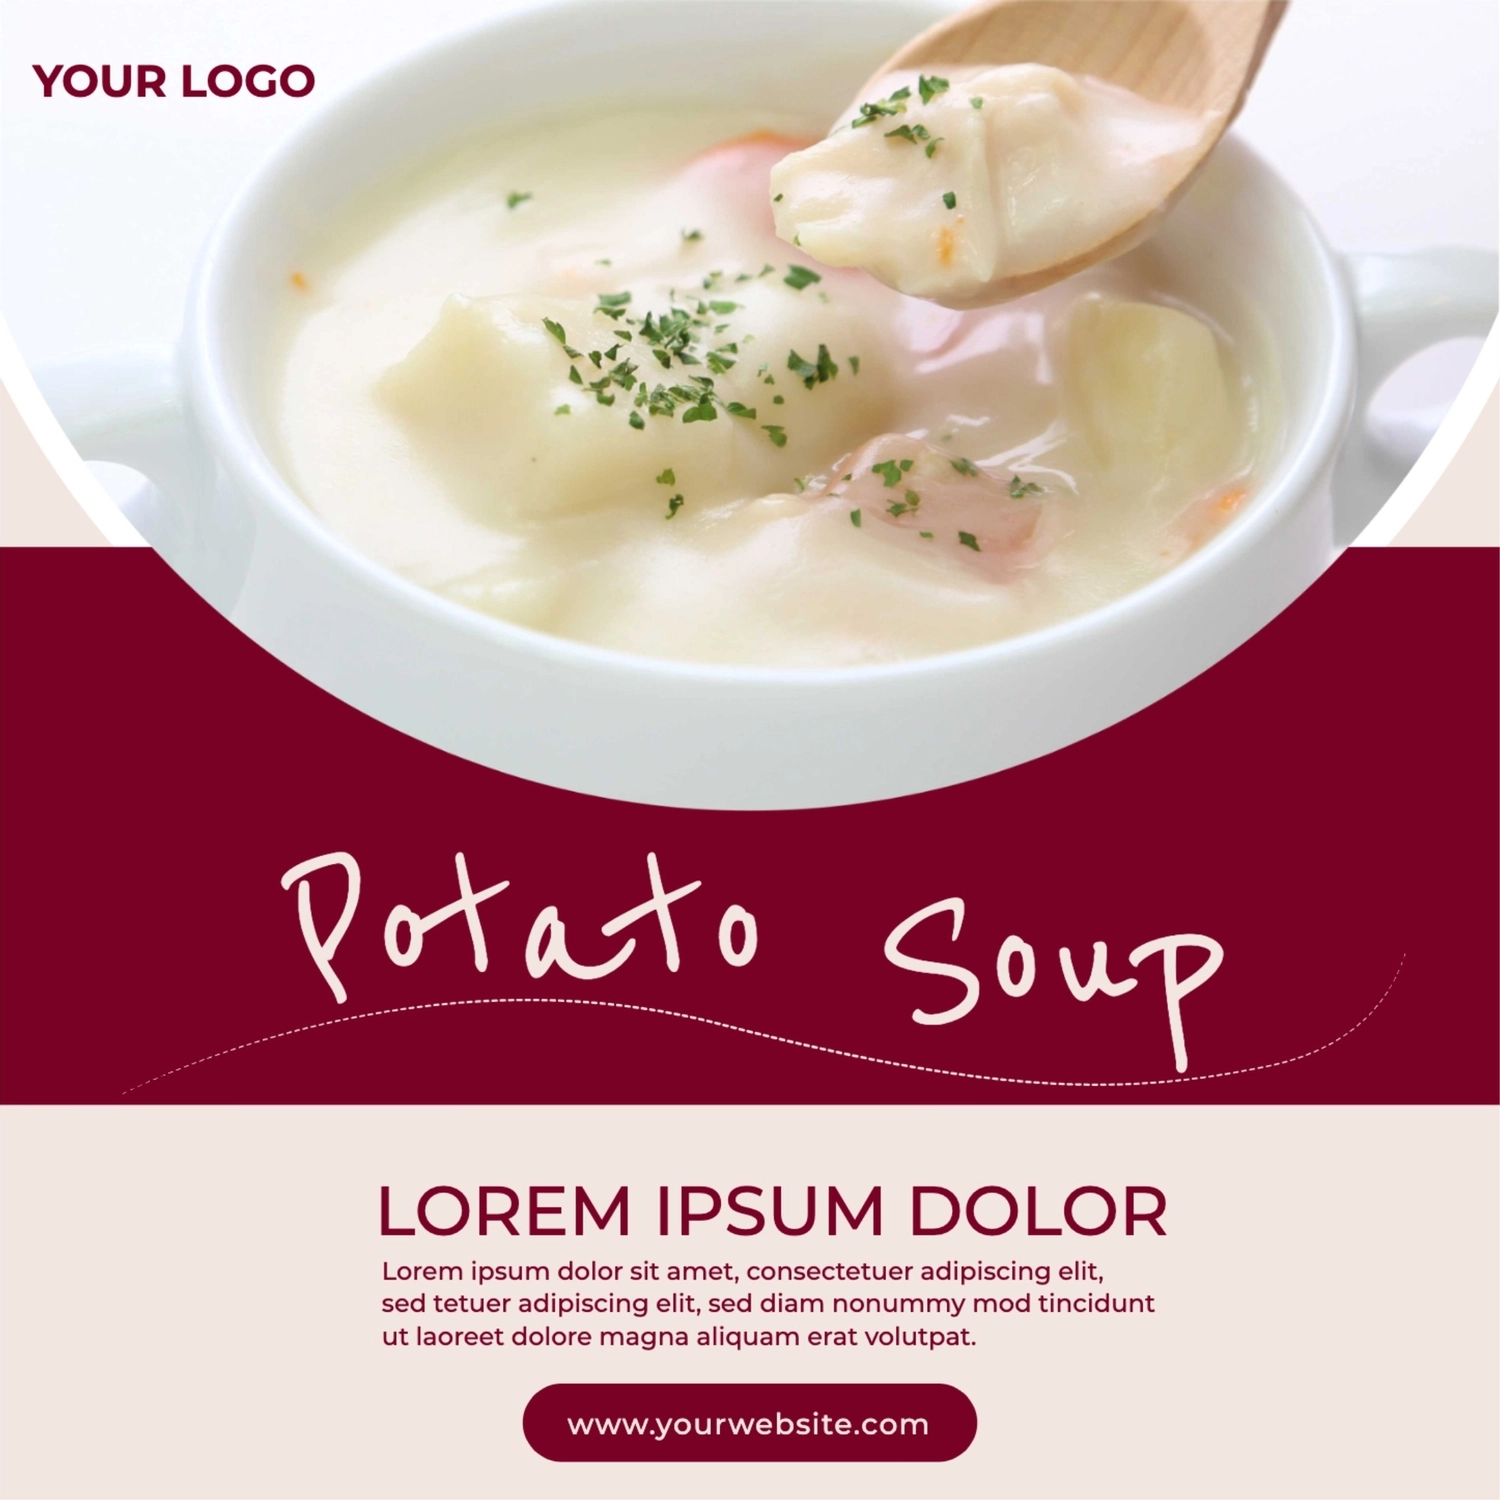 ポテトスープ, đồ ăn, Cafe, quán ăn, Instagram Post mẫu